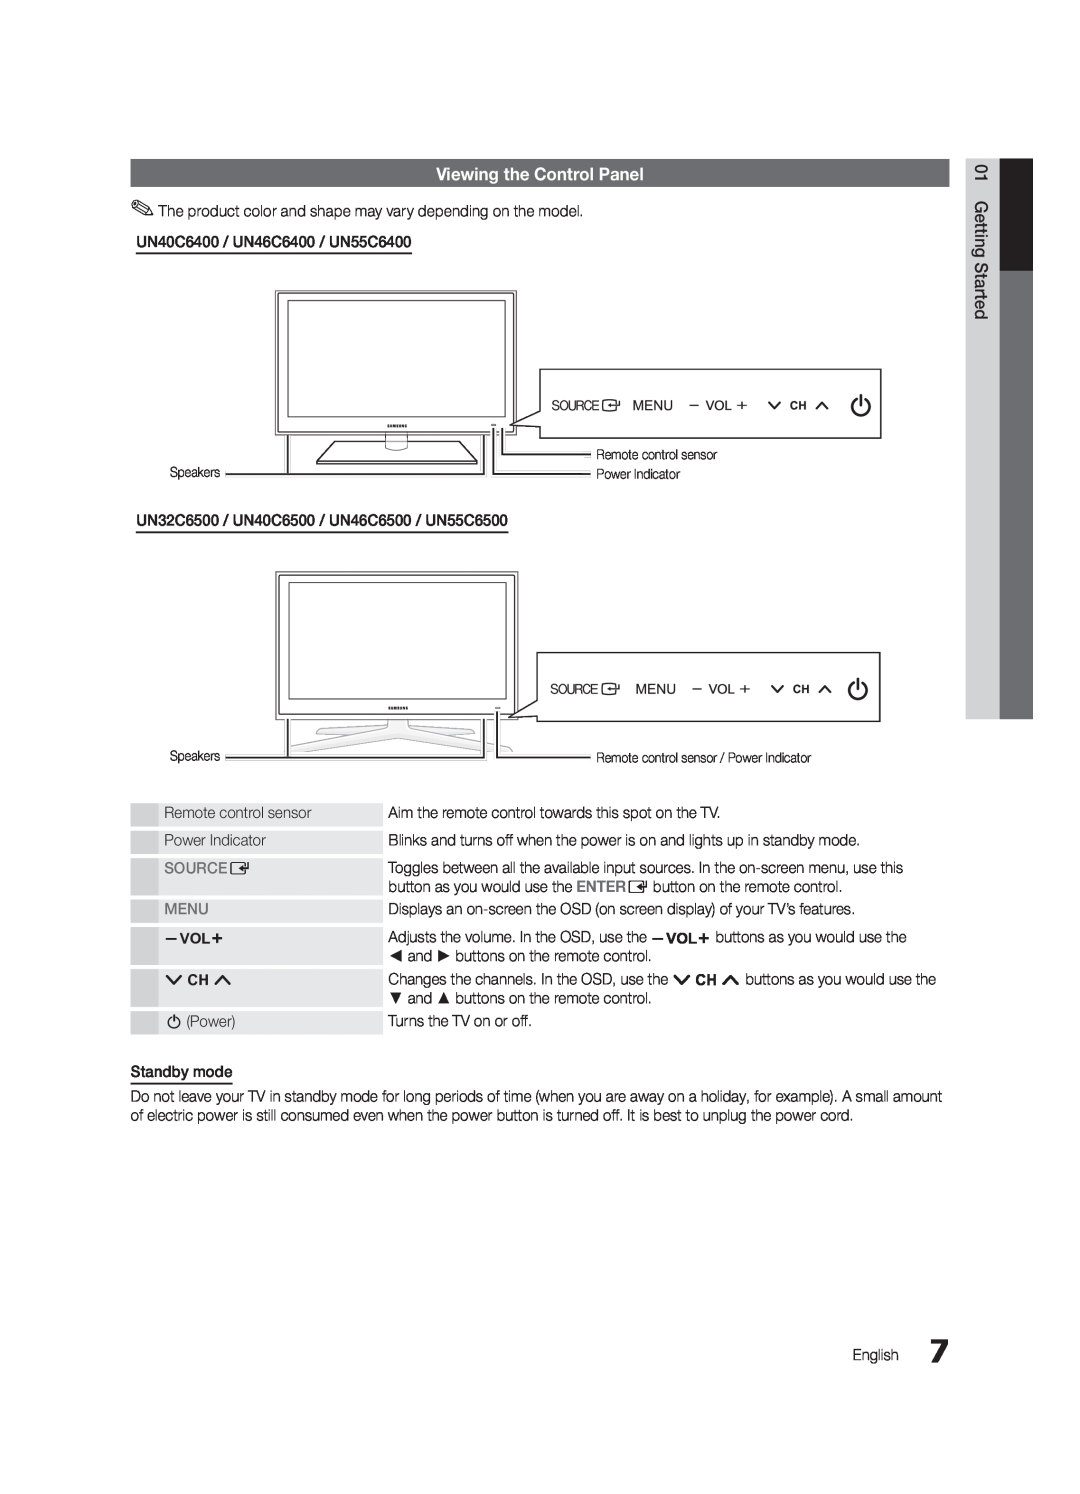 Samsung UN55C6400, UN46C6400, UN40C6500 user manual Viewing the Control Panel, Source E, Menu 